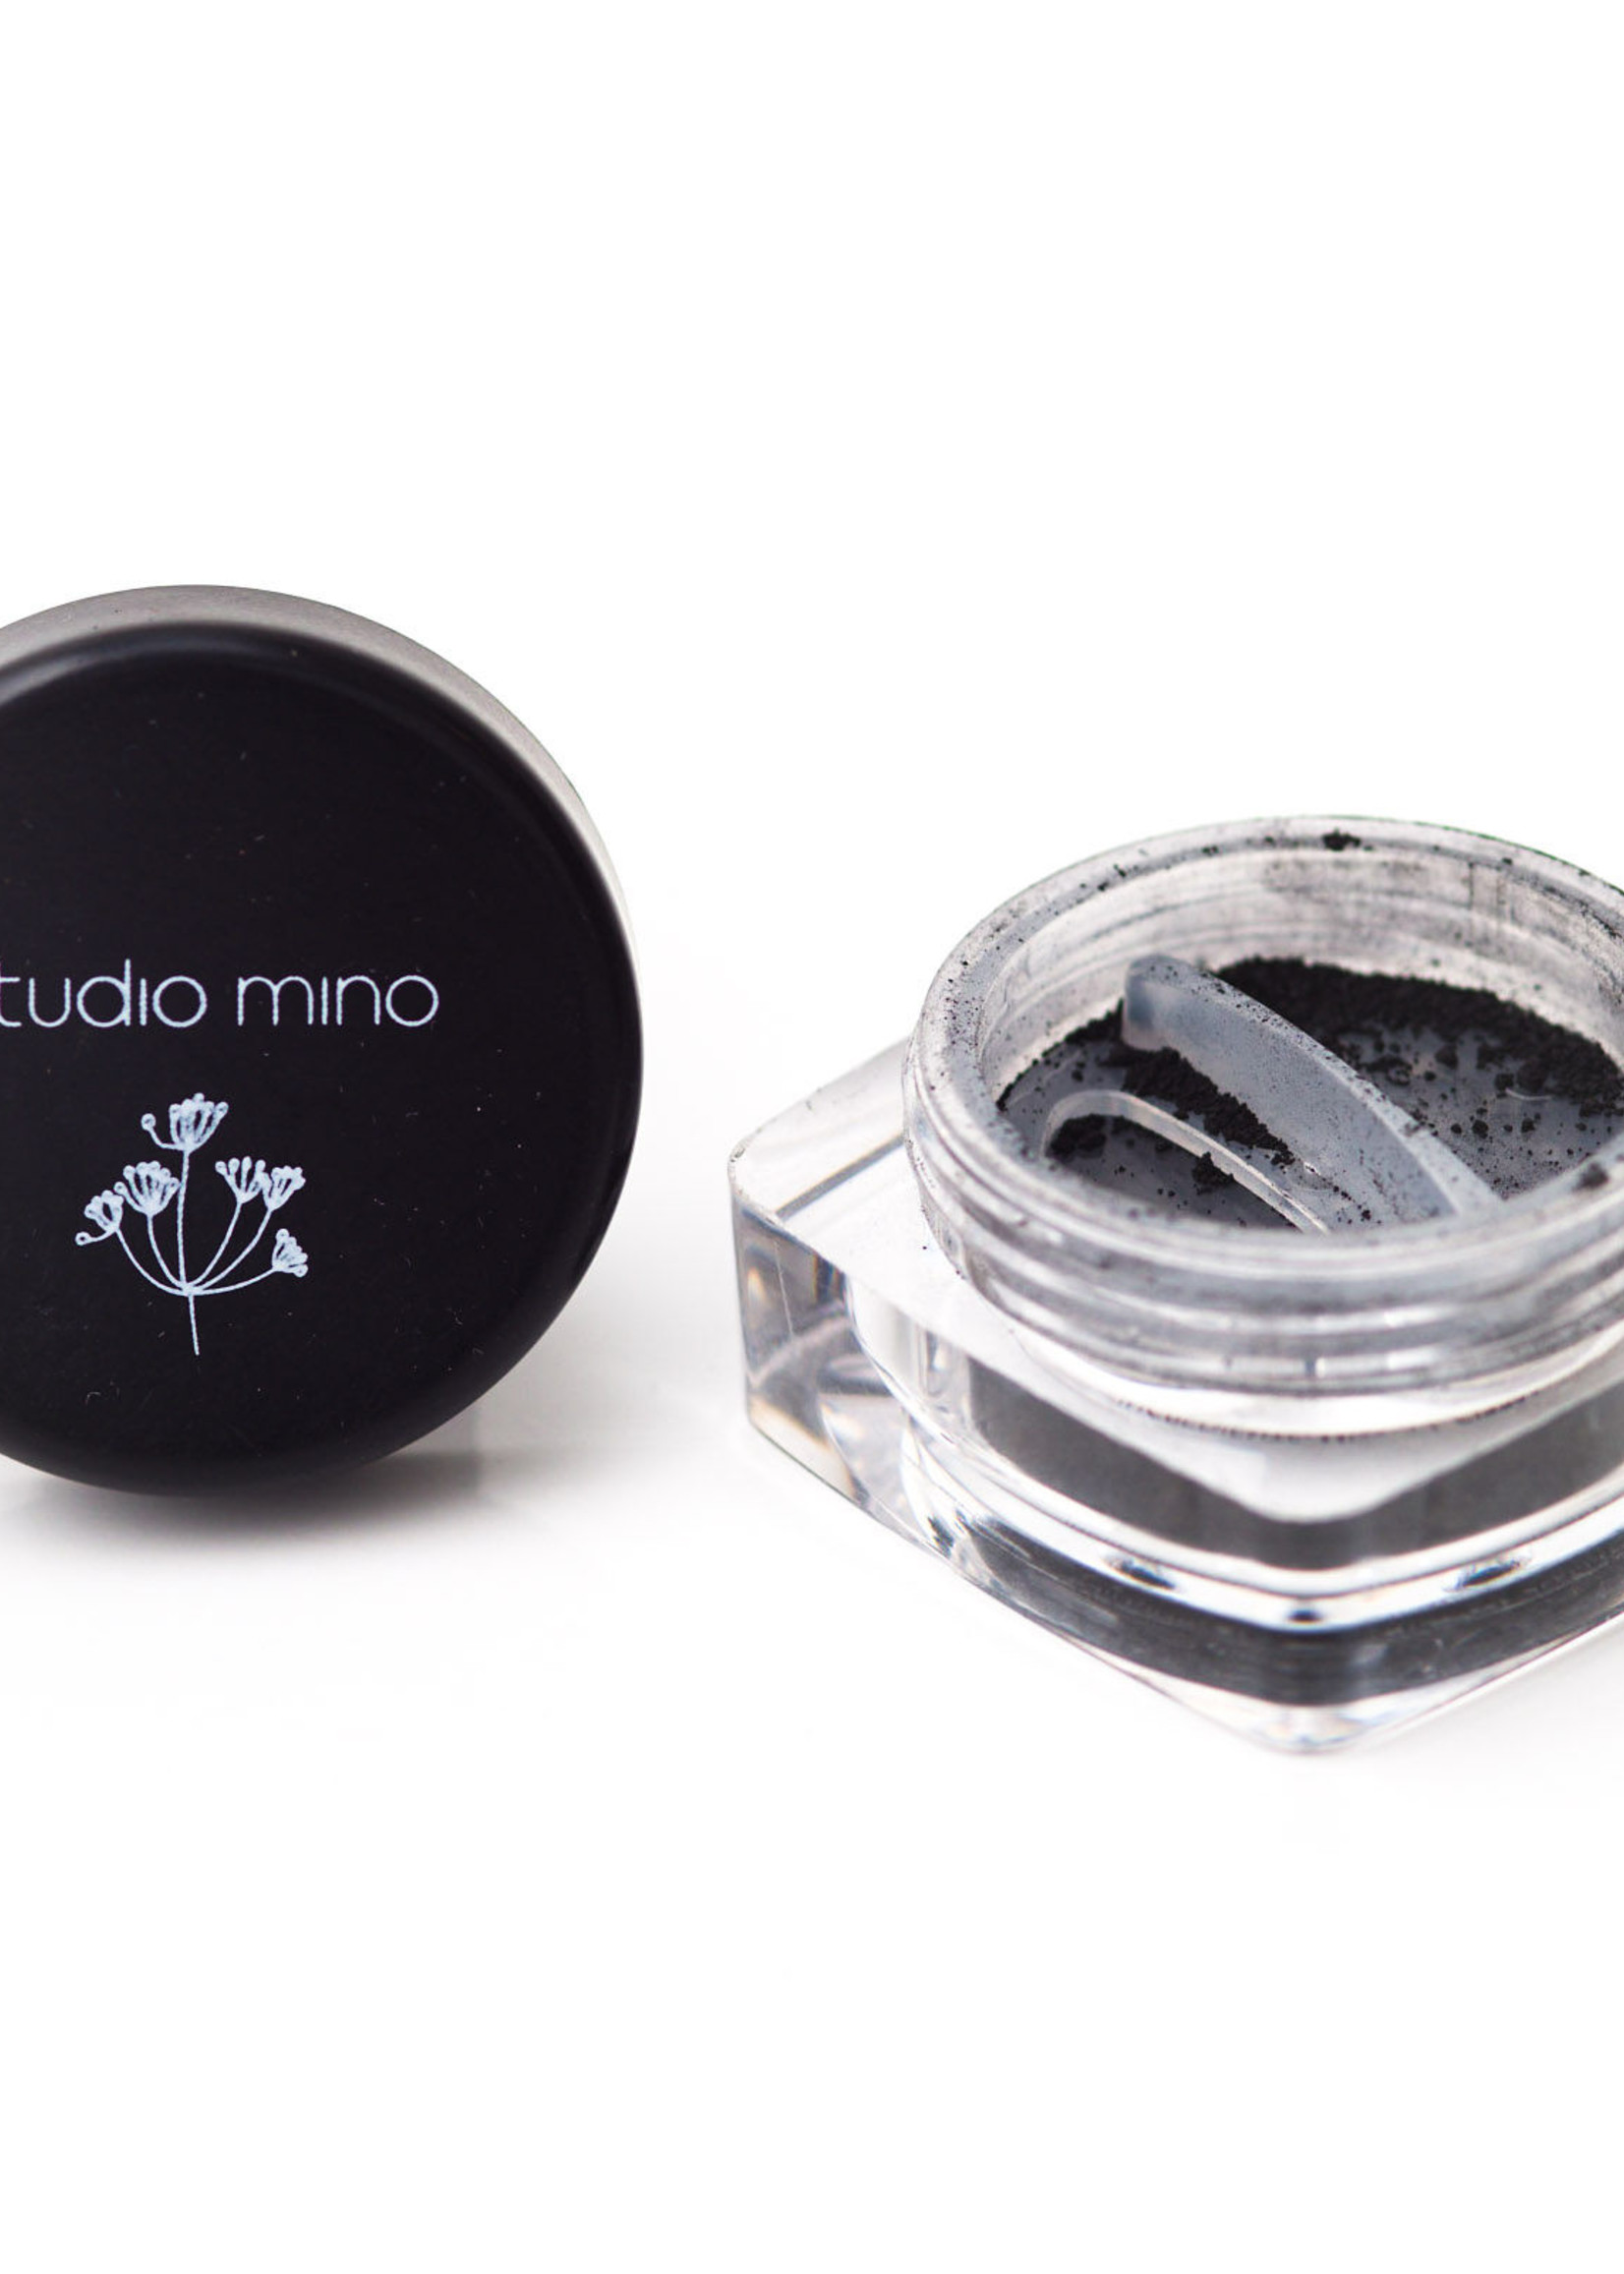 Studio mino Minerale Eyeliner Black